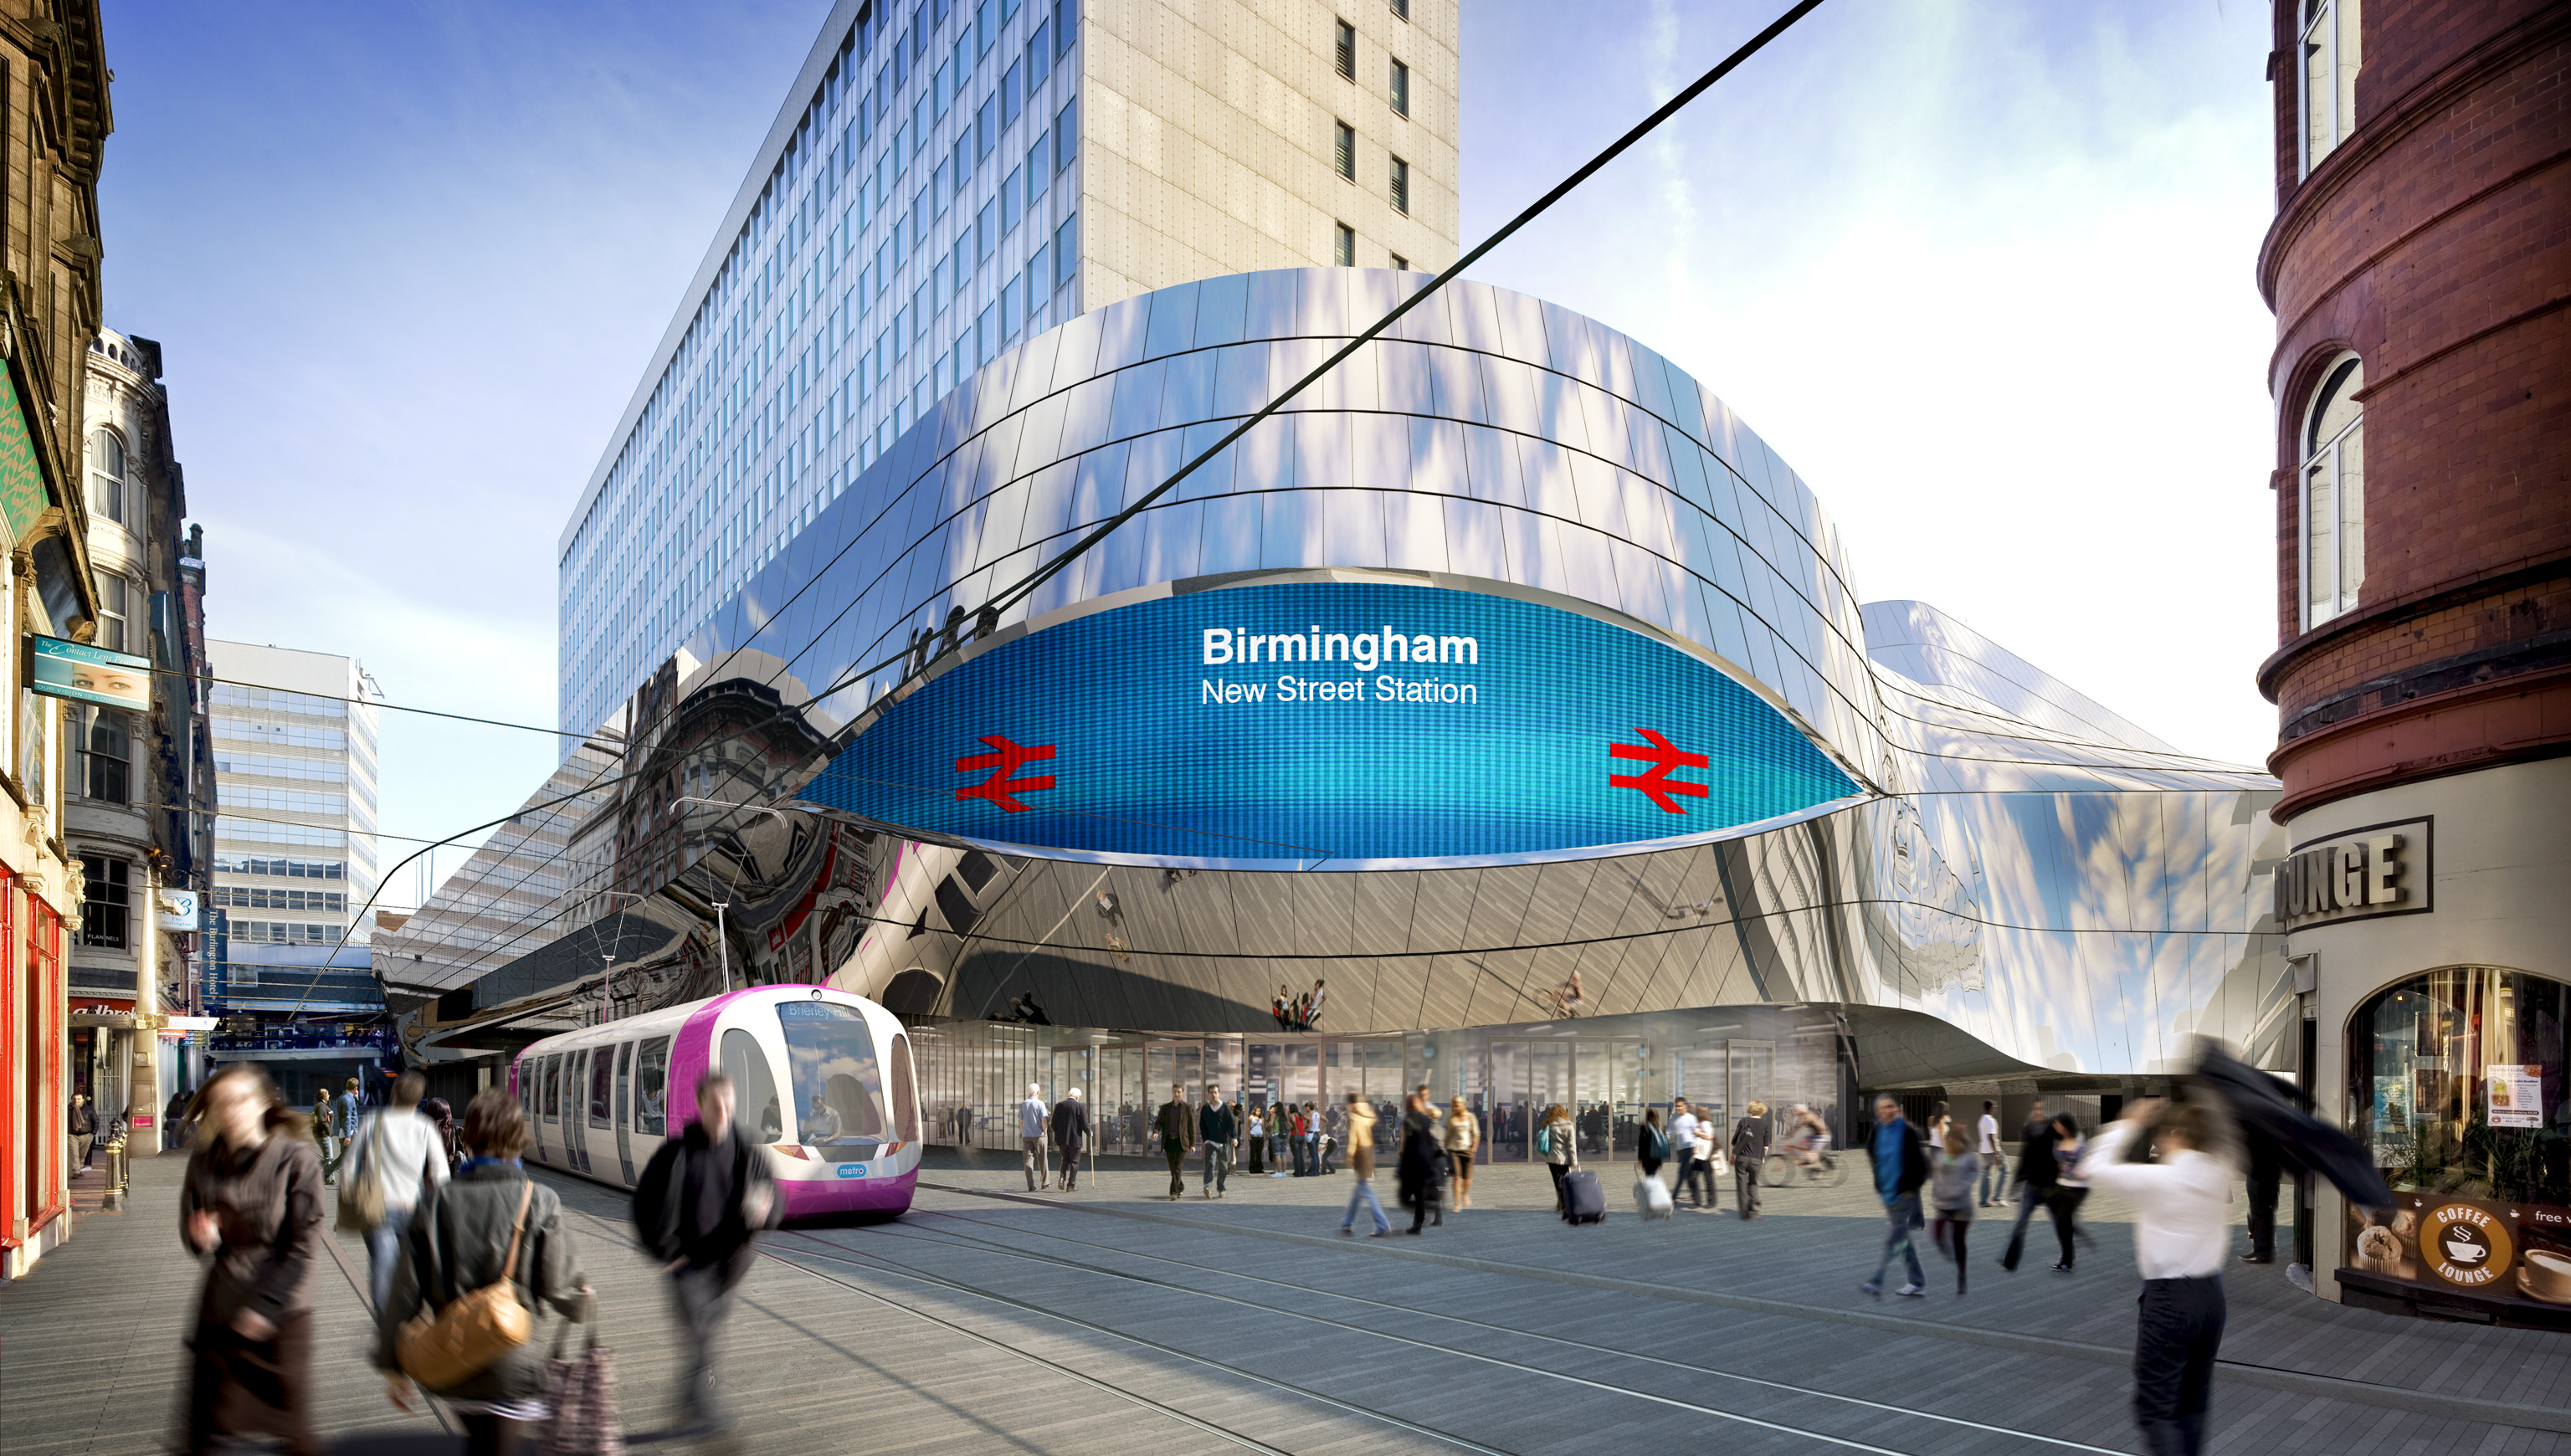 Station Masterpiece: Birmingham's rebuilt New Street Station